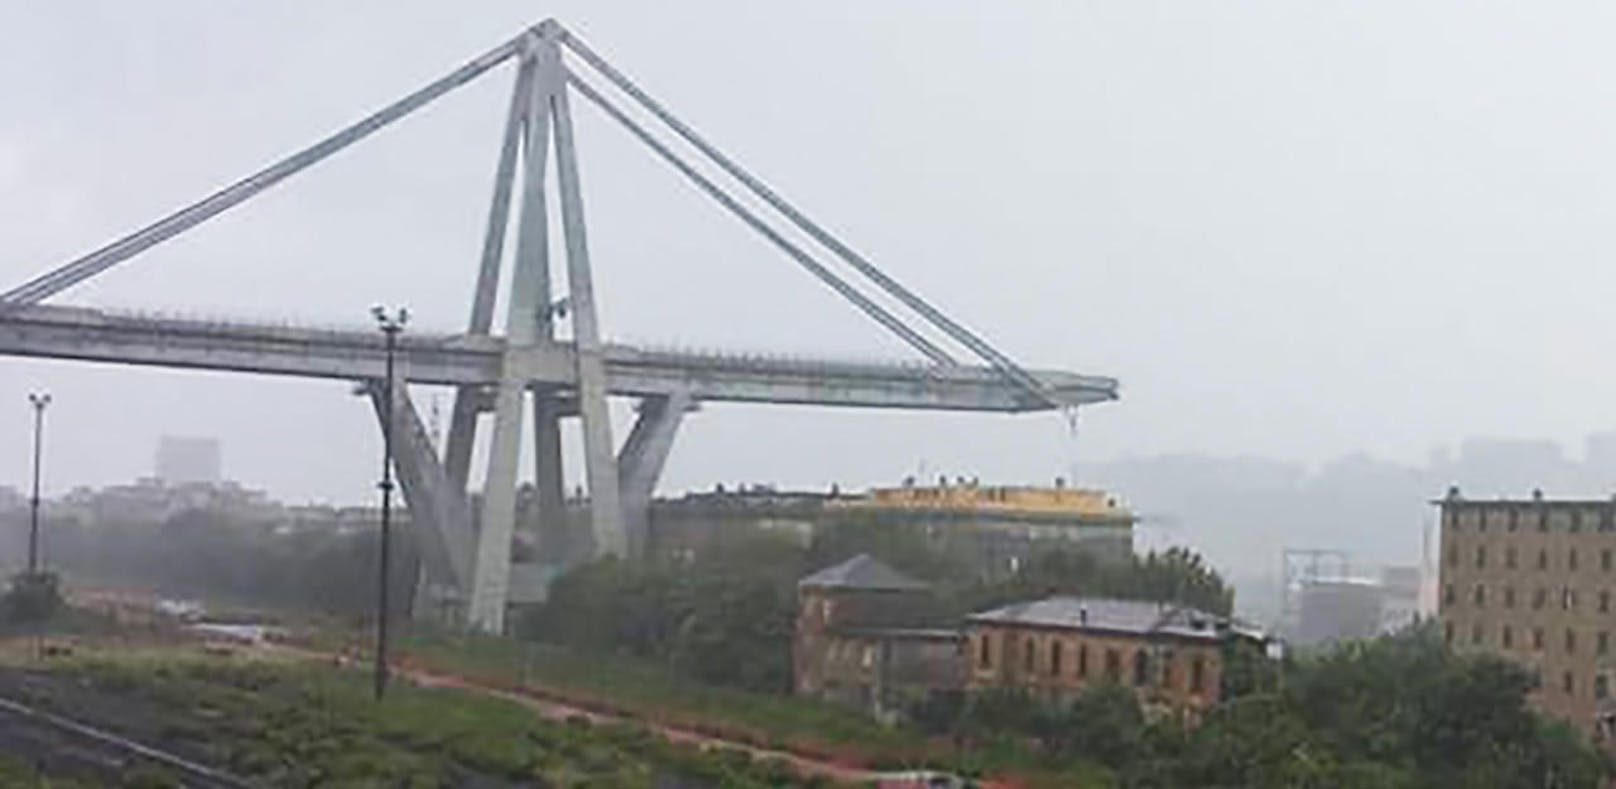 Stürzte Morandi-Brücke wegen Mafia-Pfusch ein?